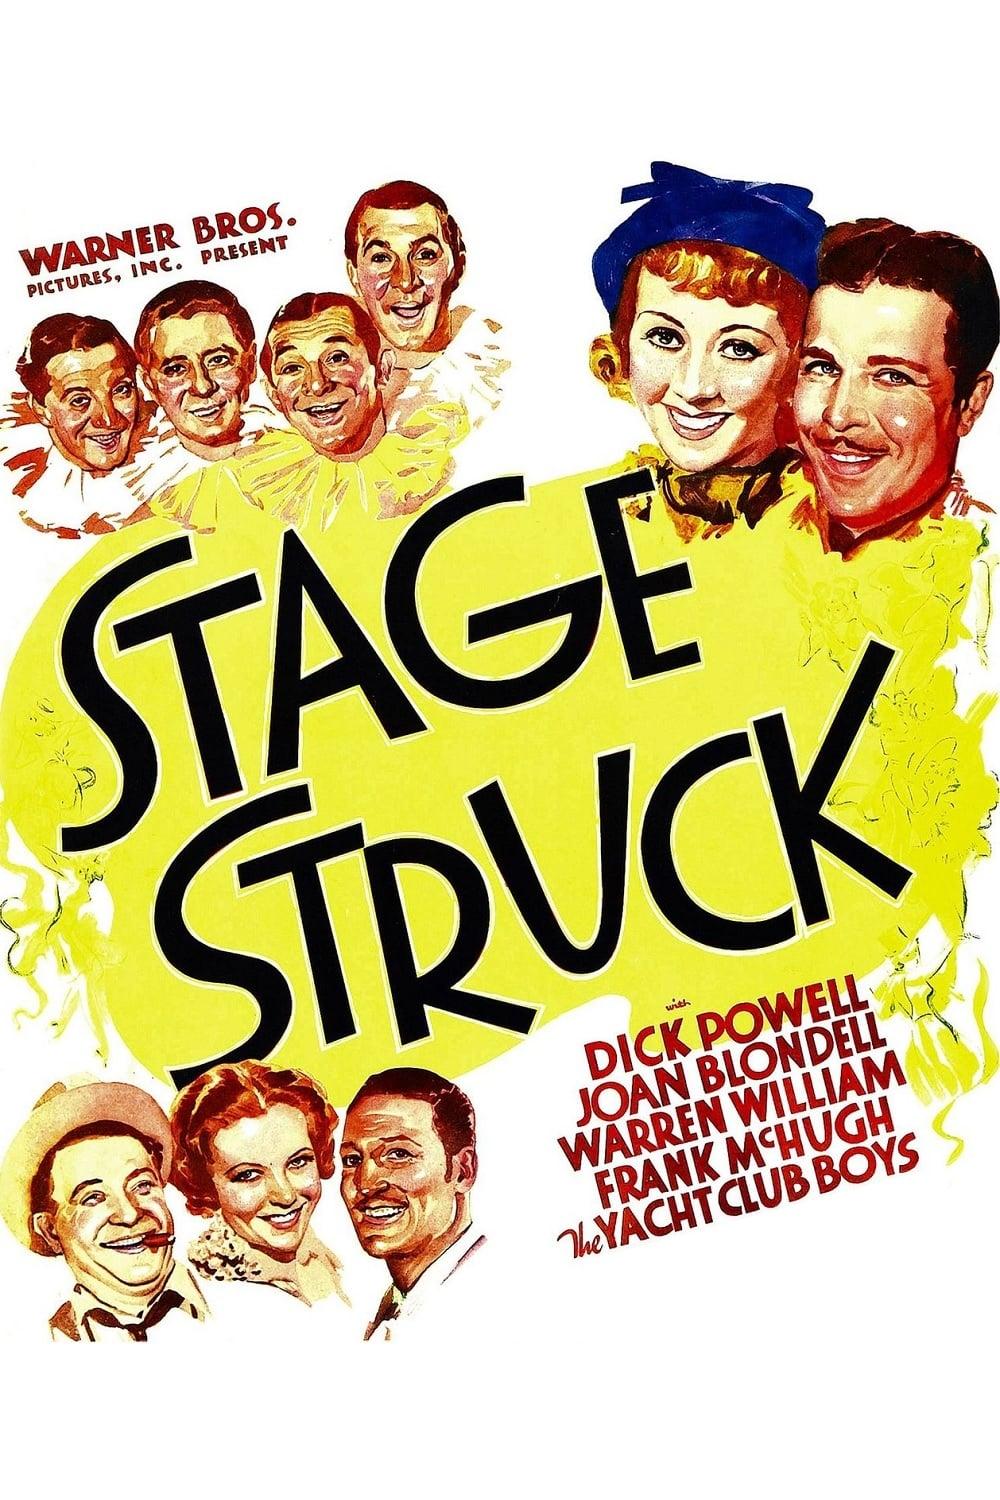 Stage Struck poster